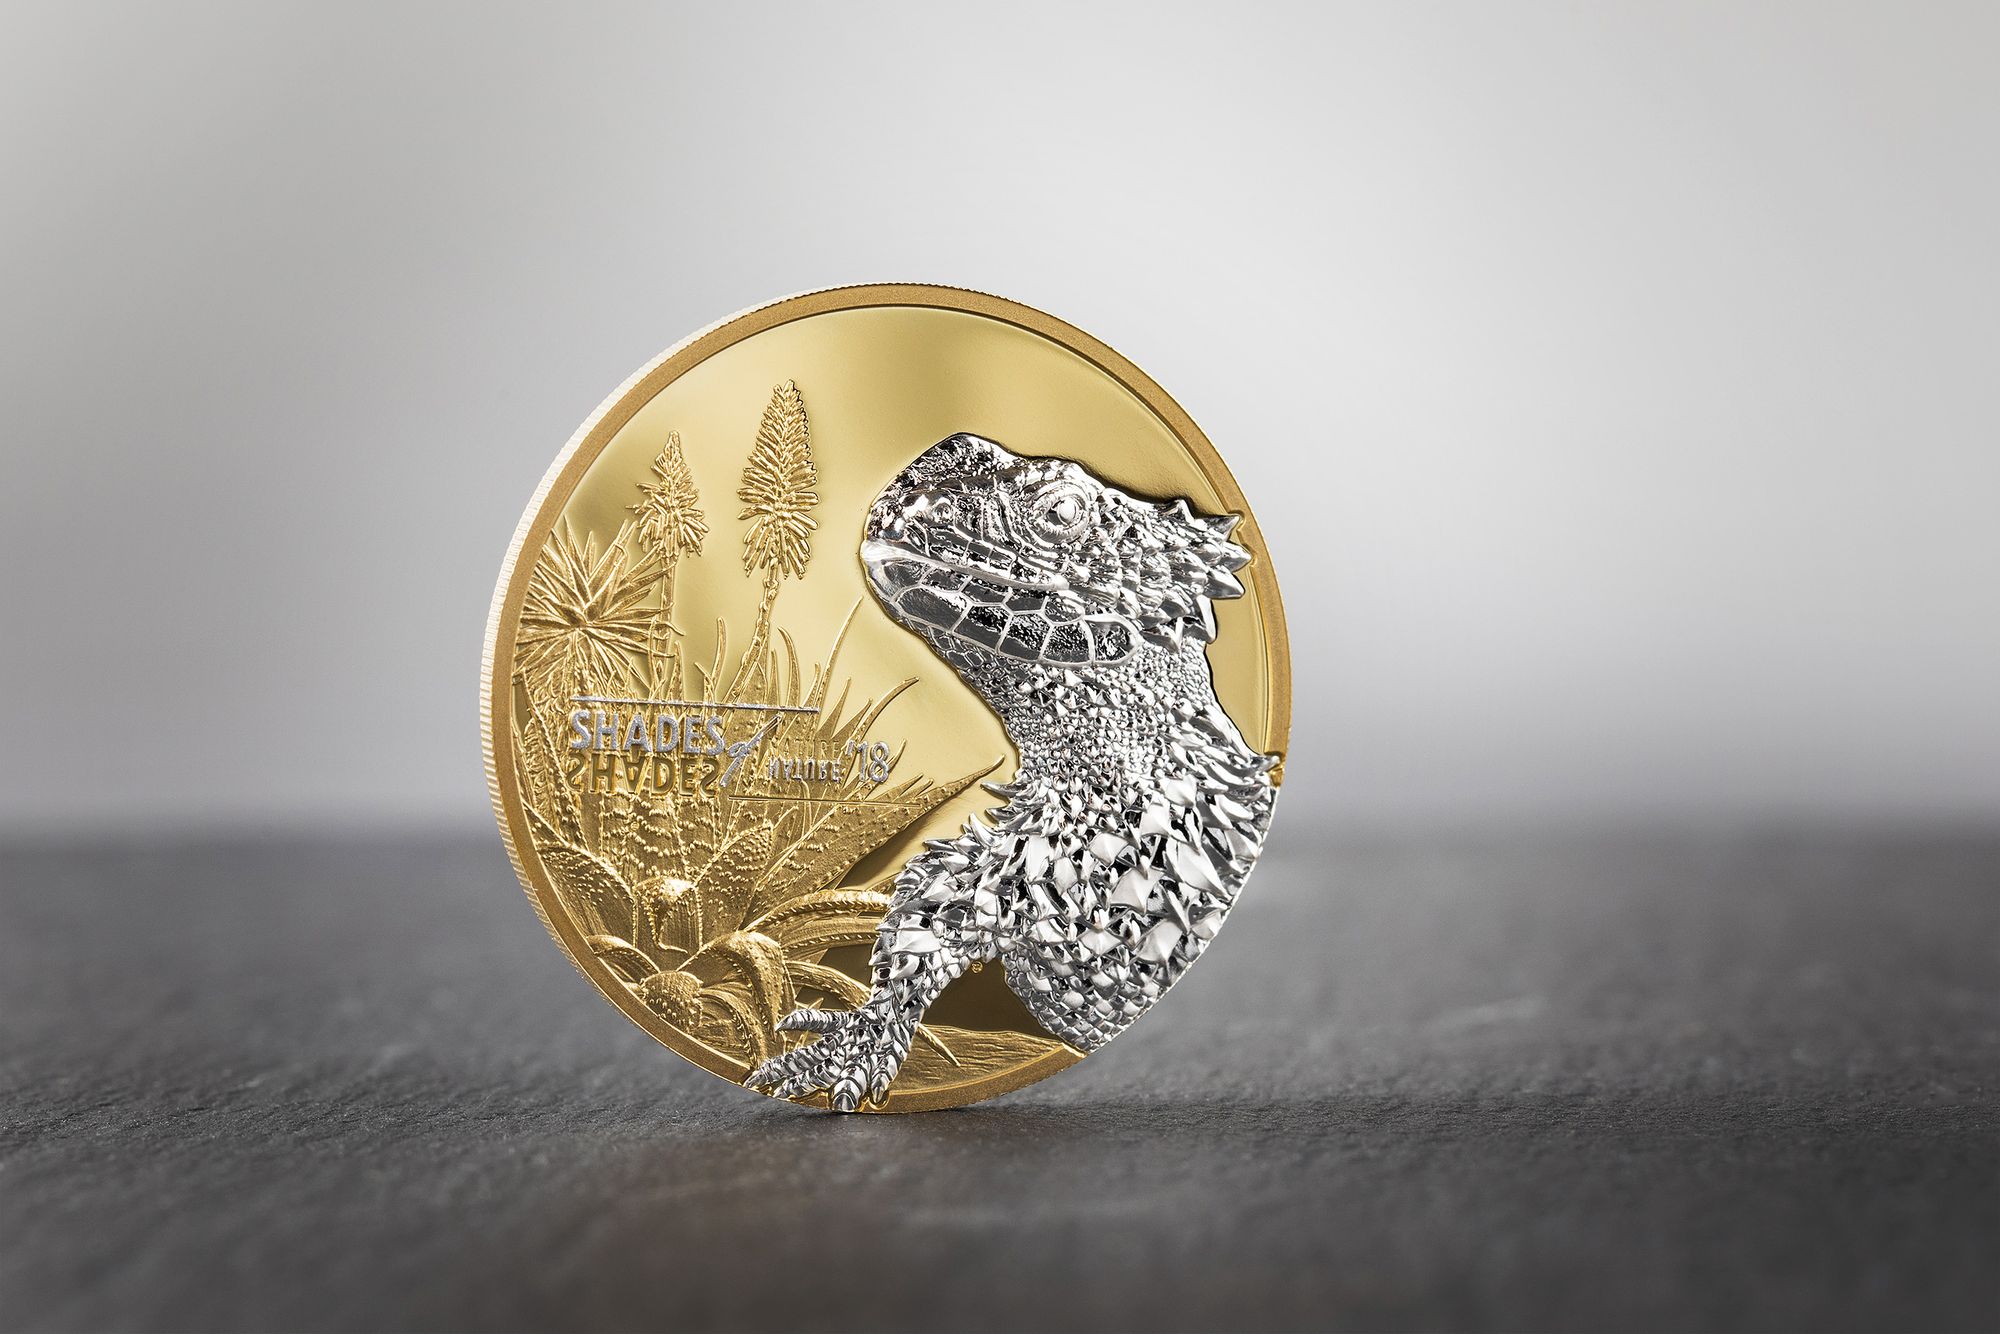 2018 Shades of Nature Girdled Lizard 25 gram Silver Coin